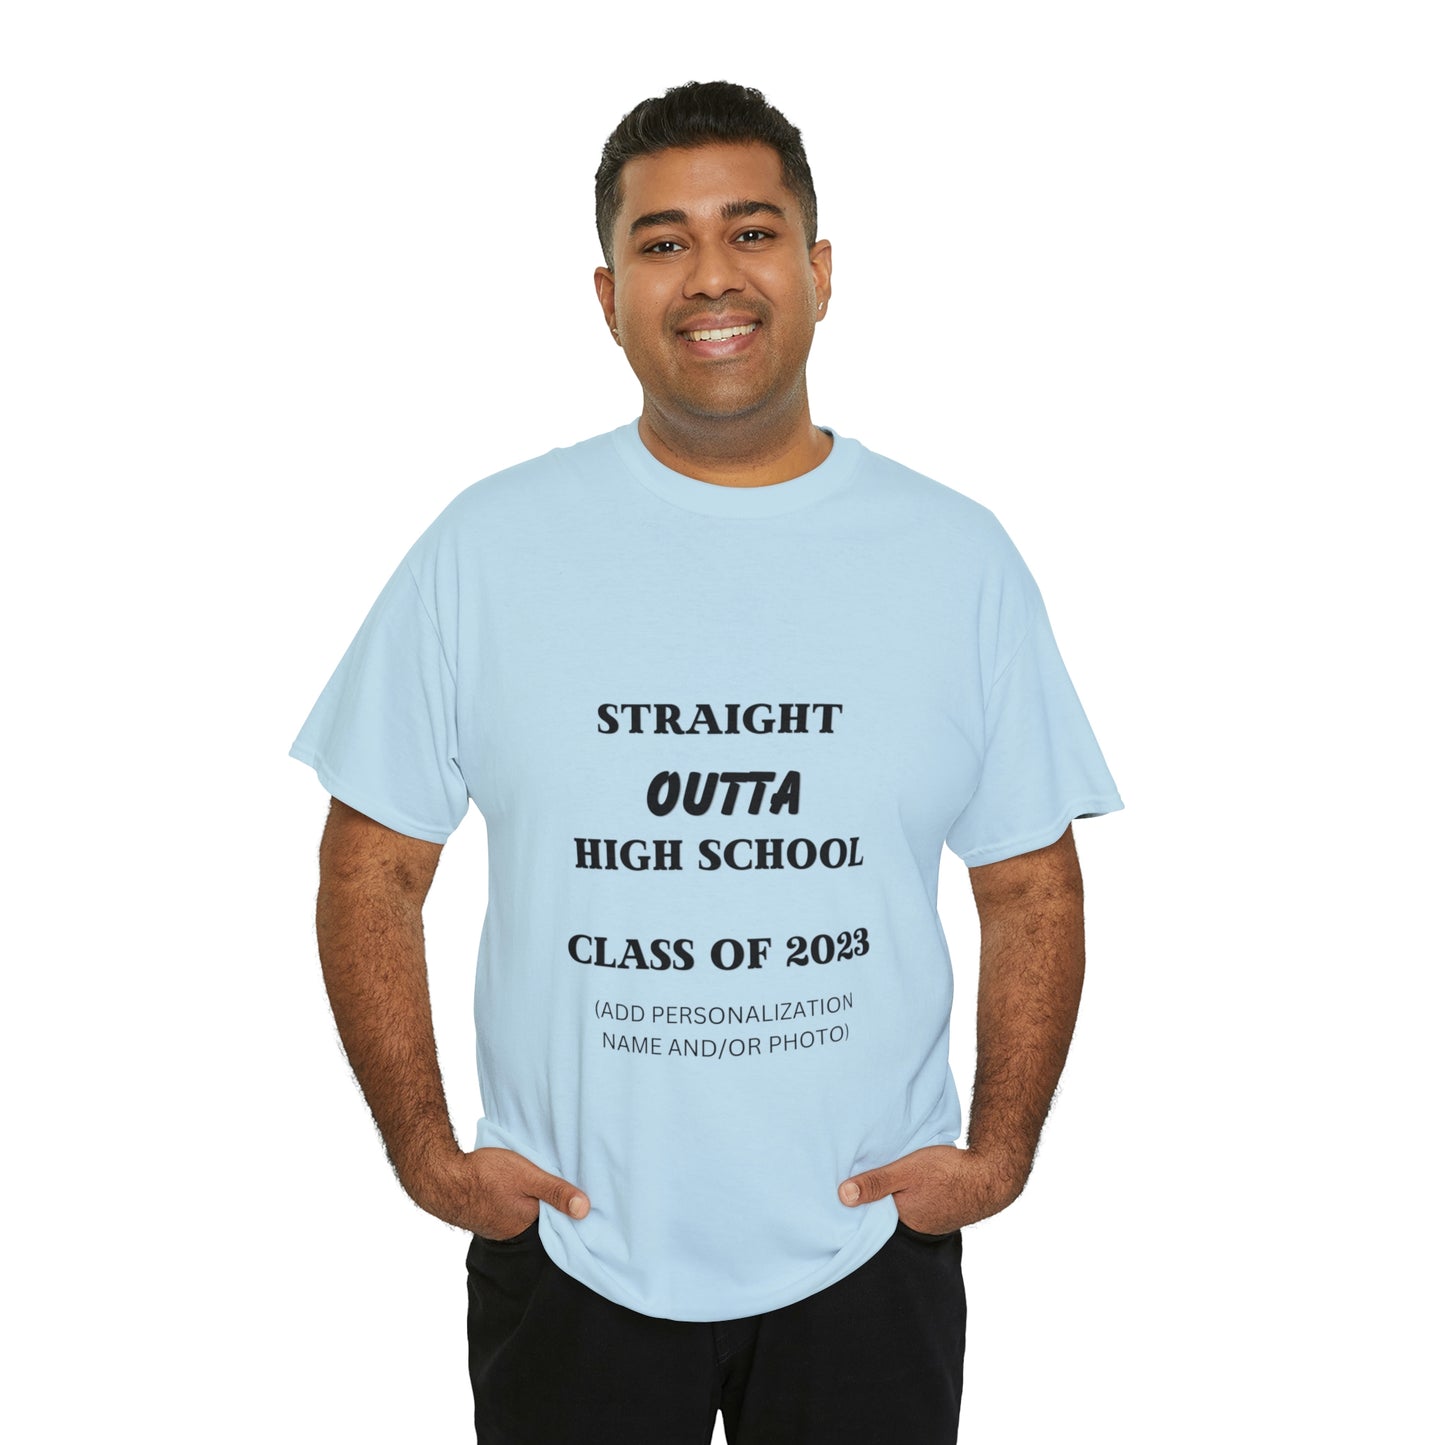 Straight Outta High School T-shirt 2023 Graduation T-shirt (PERSONALIZED)